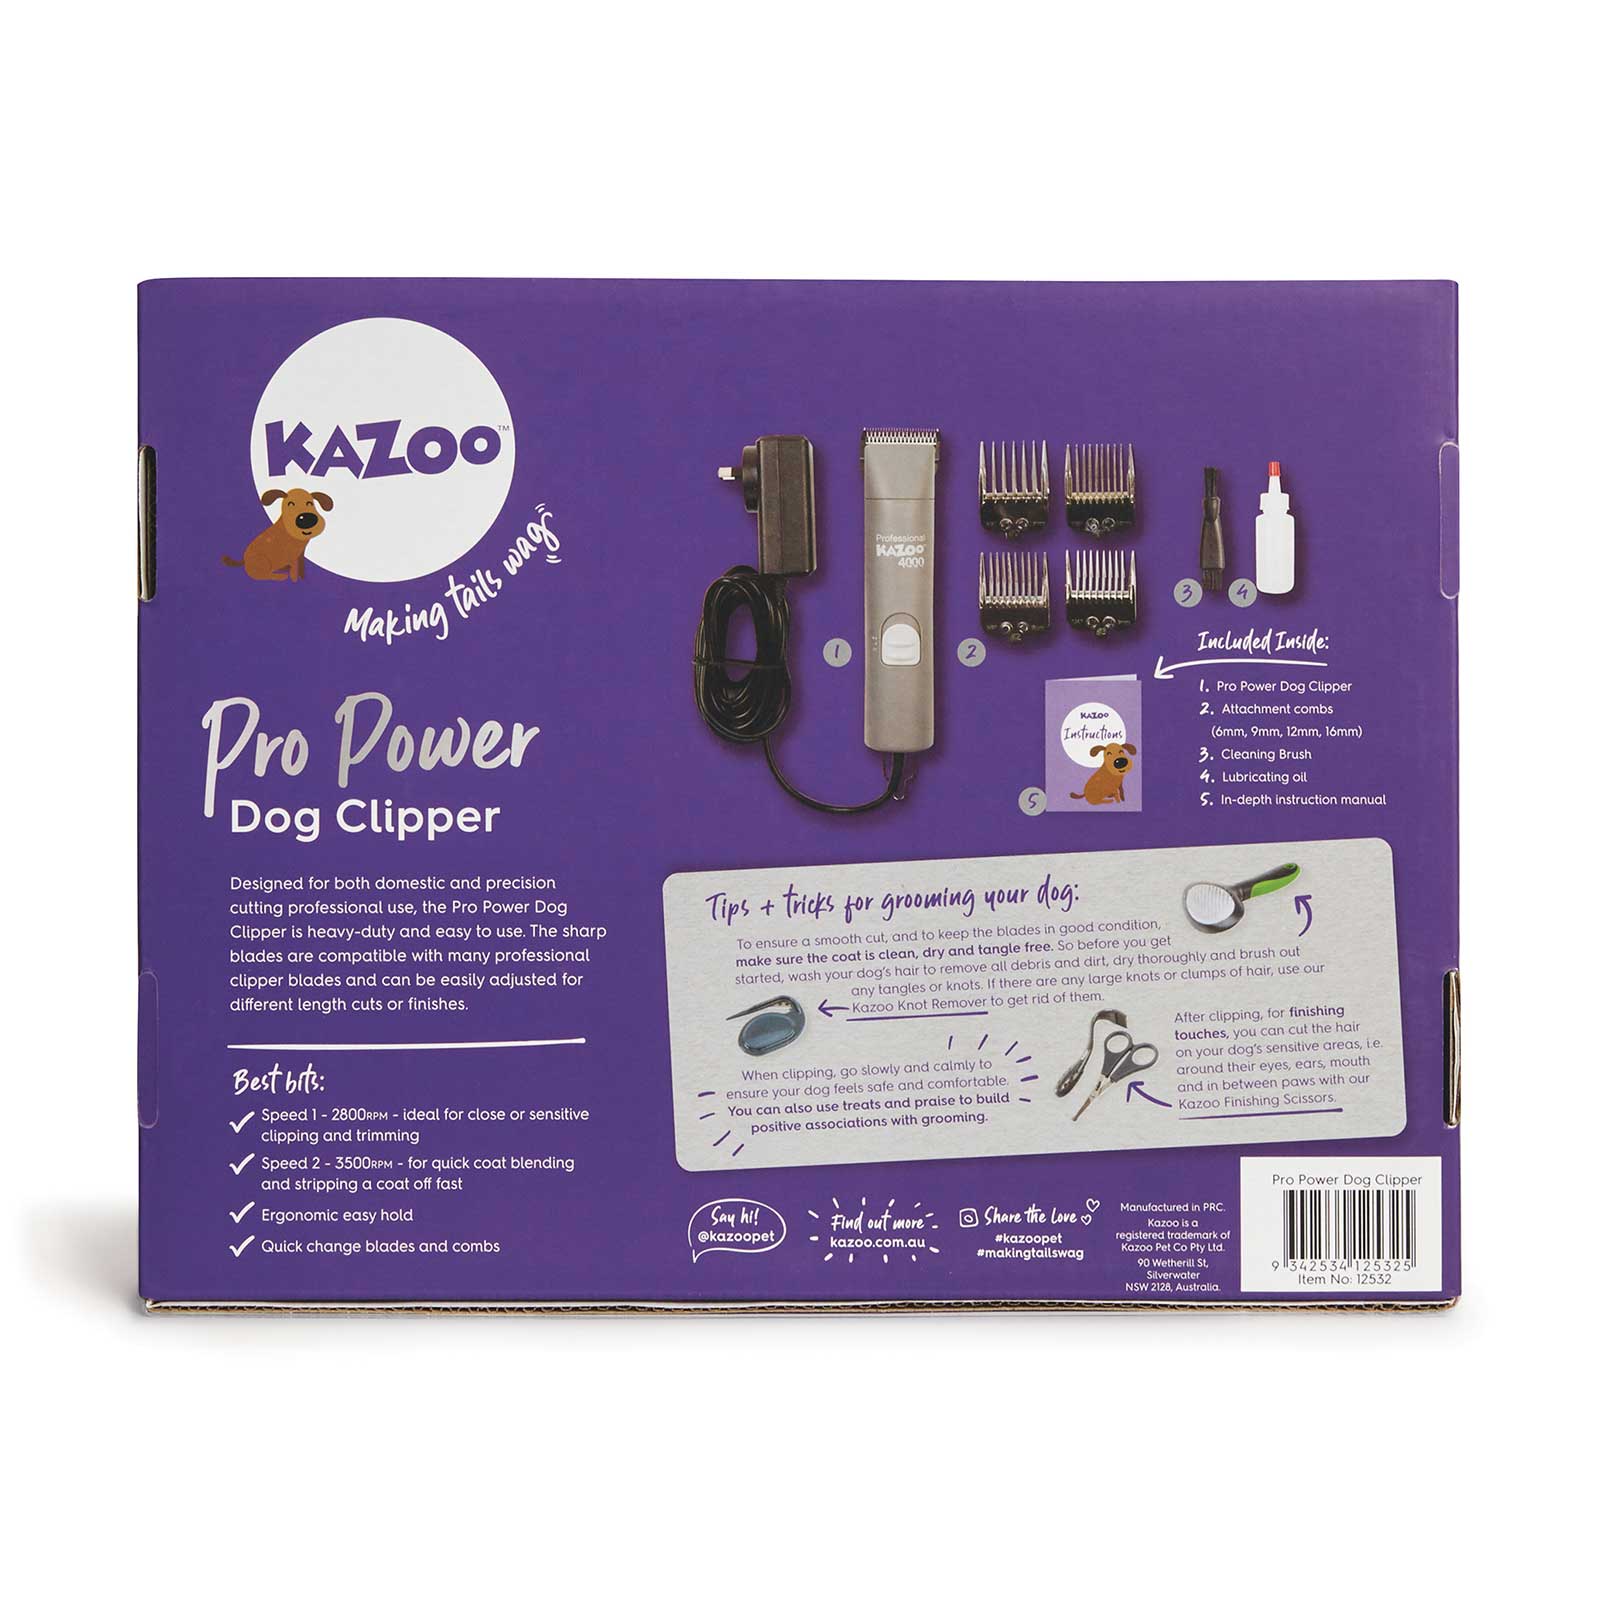 Kazoo Dog Clipper Pro Power 4000